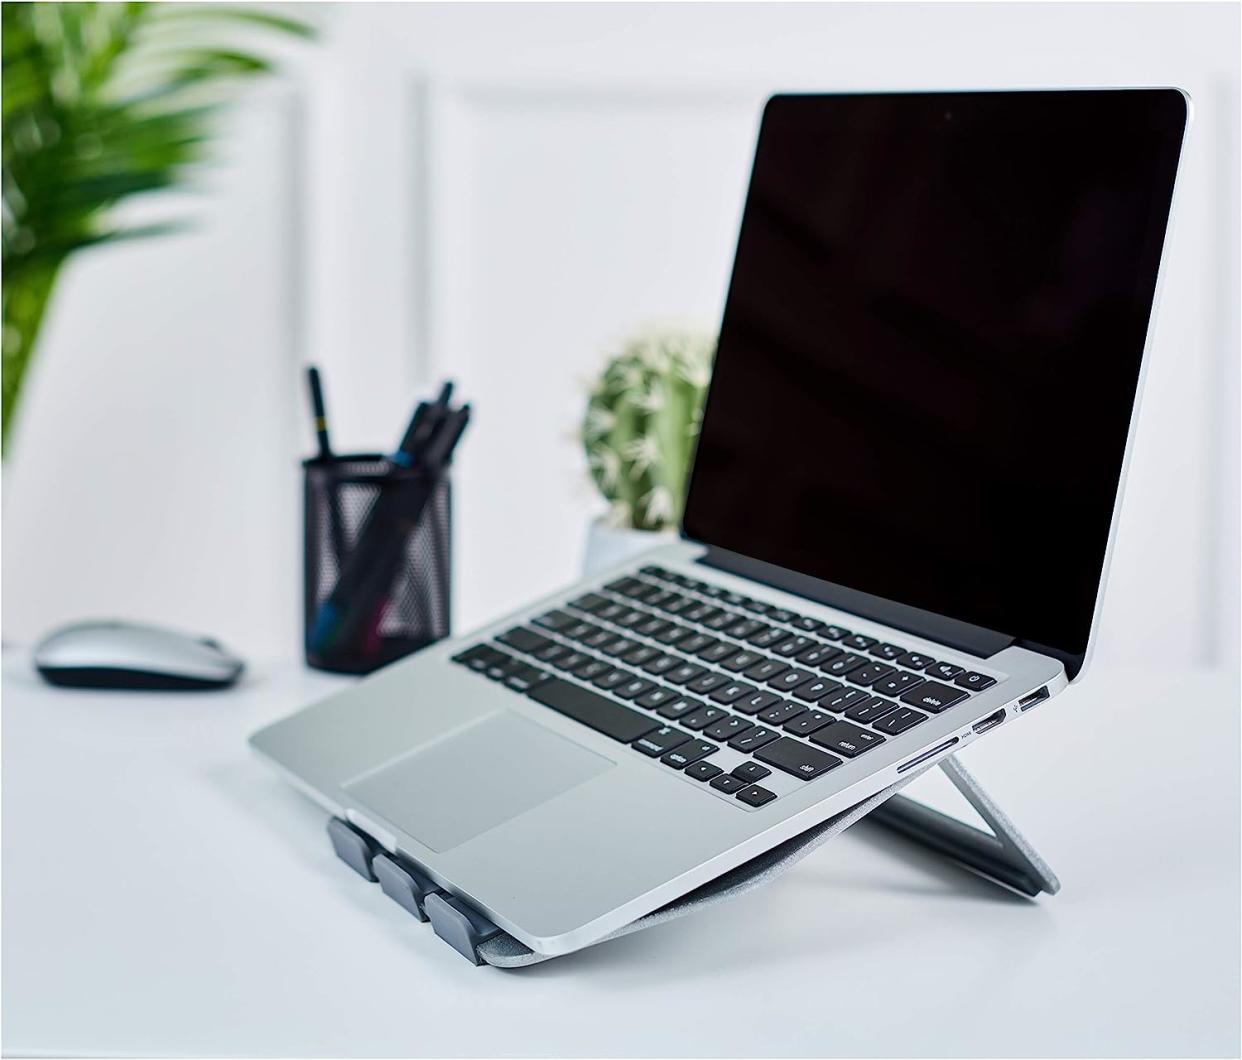 Soporte para laptop plegable y portátil de aluminio de hasta 13 pulgadas Amazon Basics